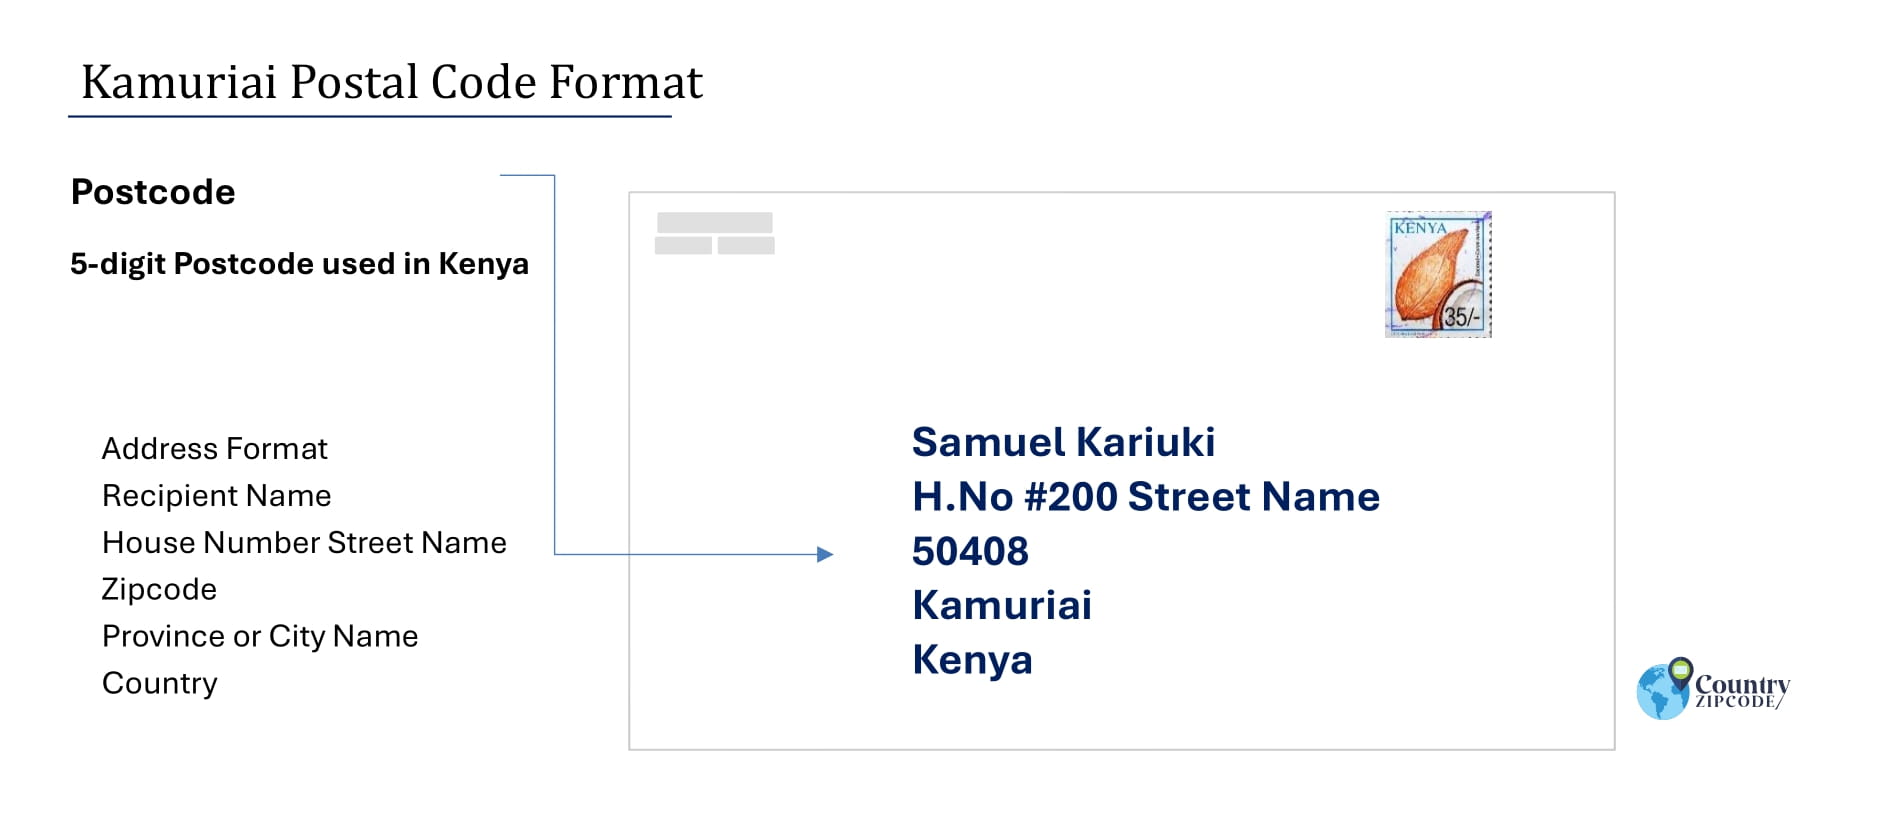 Example of Kamuriai Address and postal code format